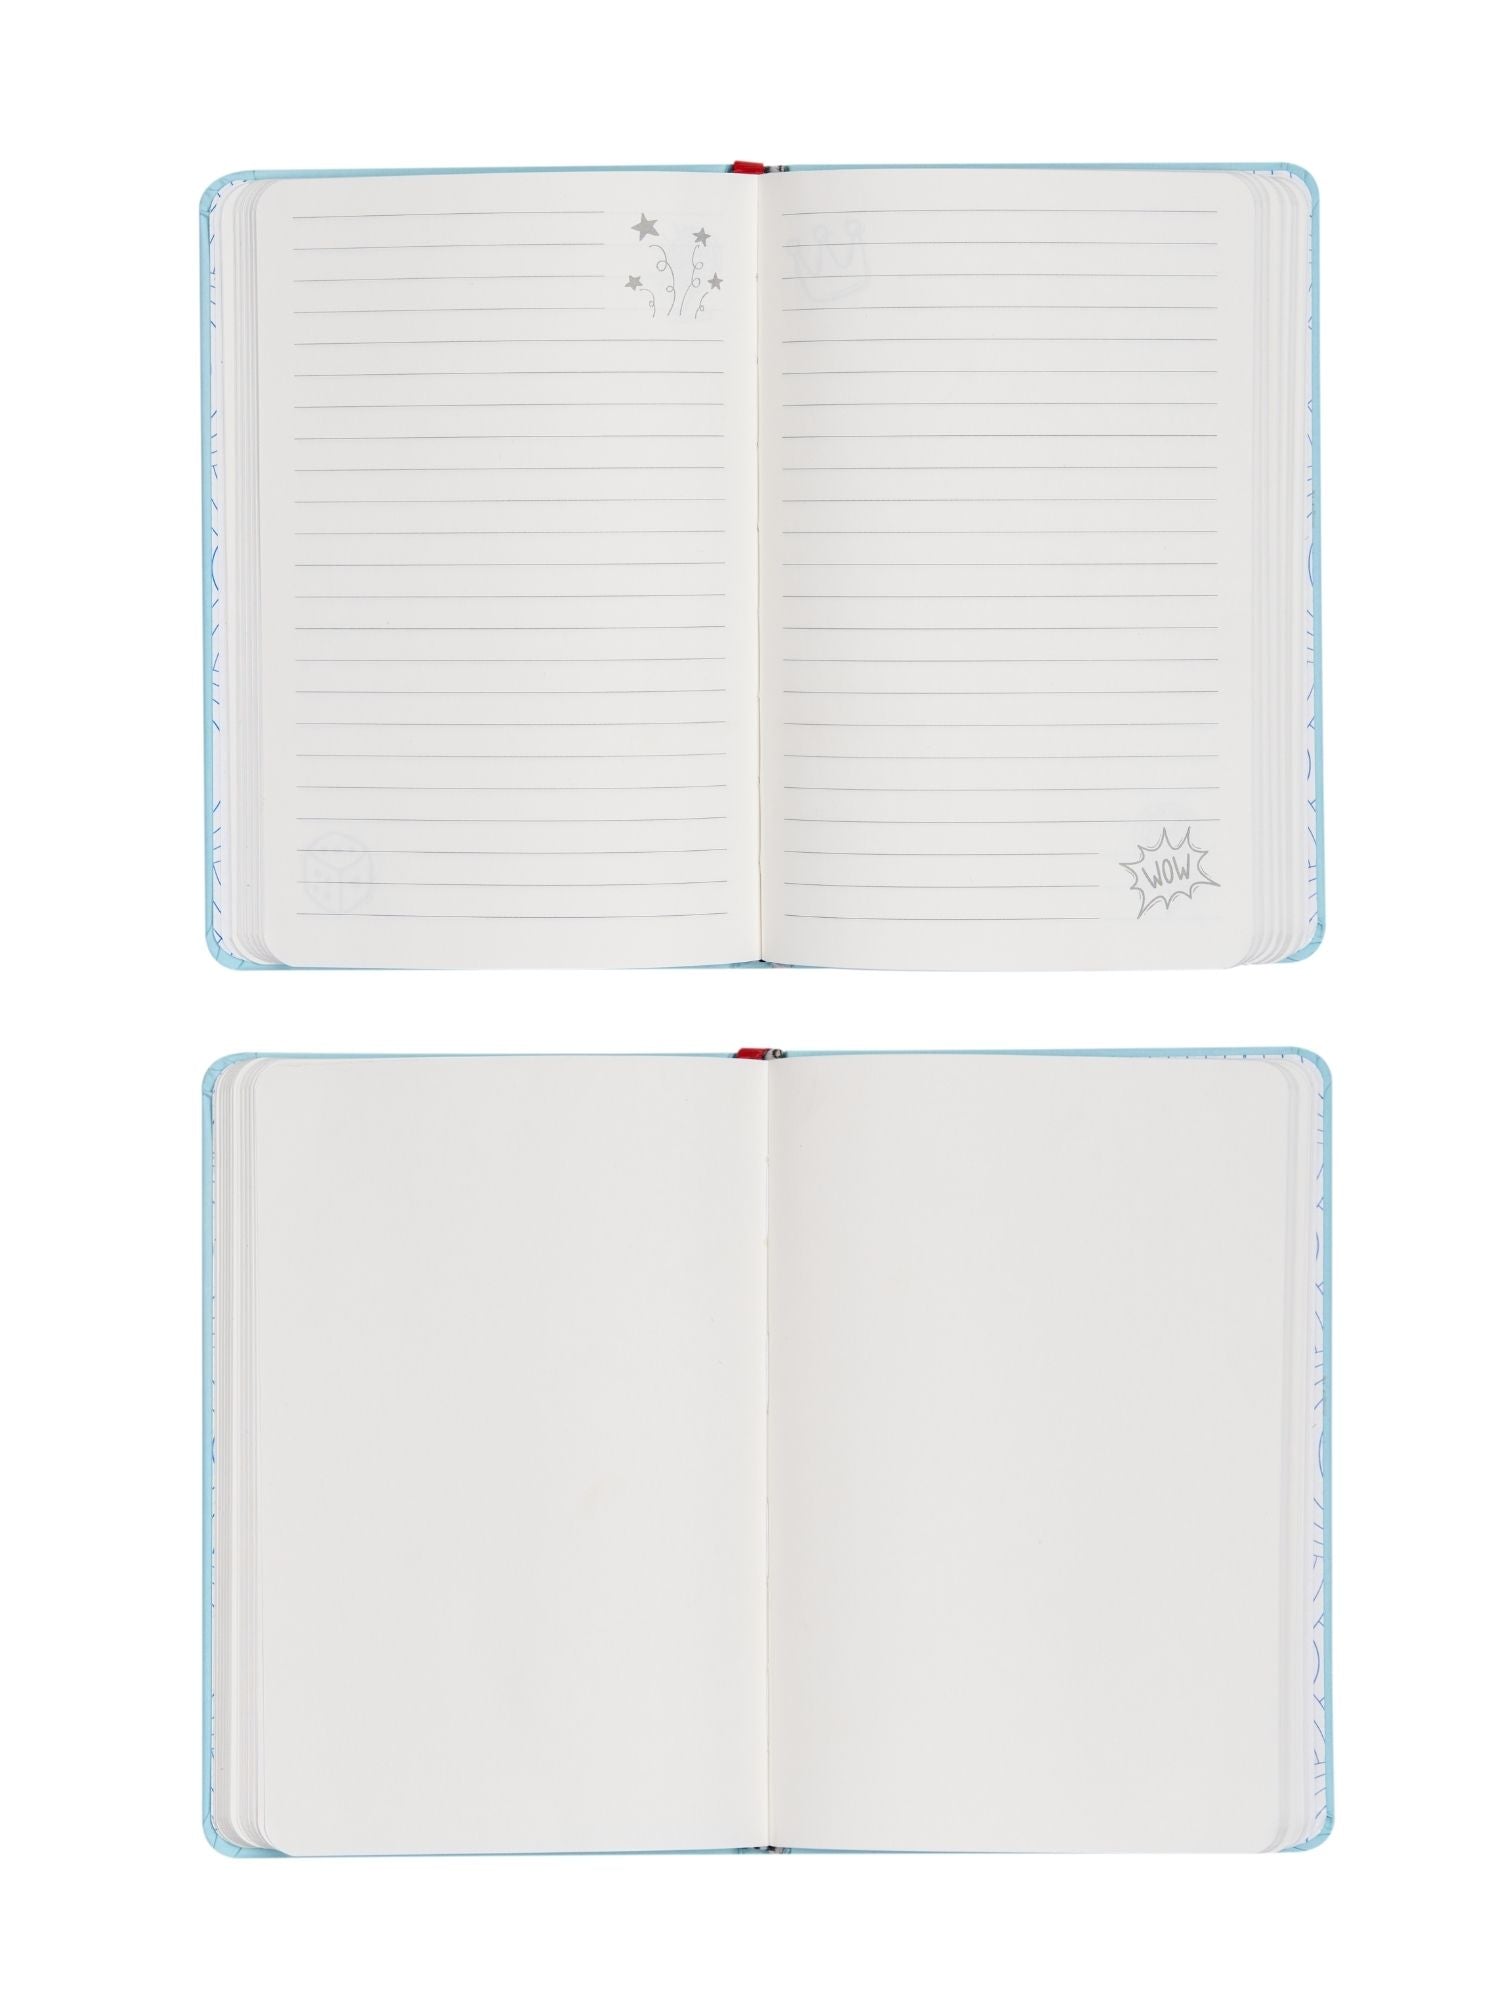 Doodle Initial O Stripes Theme Premium Hard Bound B6 Notebook Diary